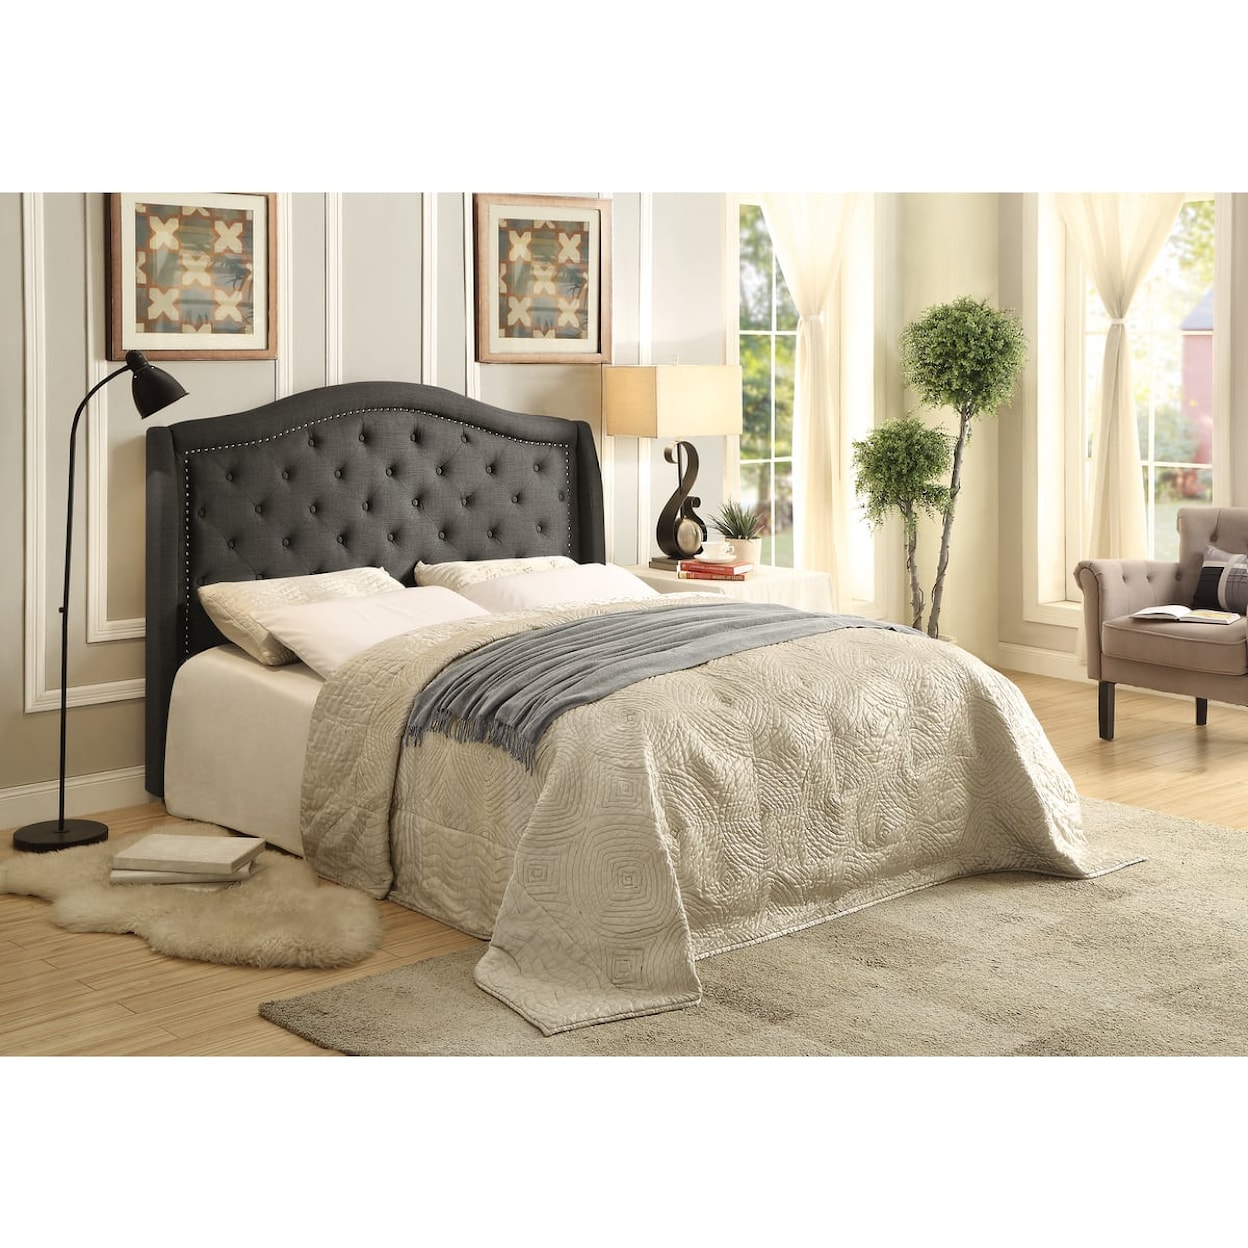 Homelegance Furniture Bryndle Queen Bed